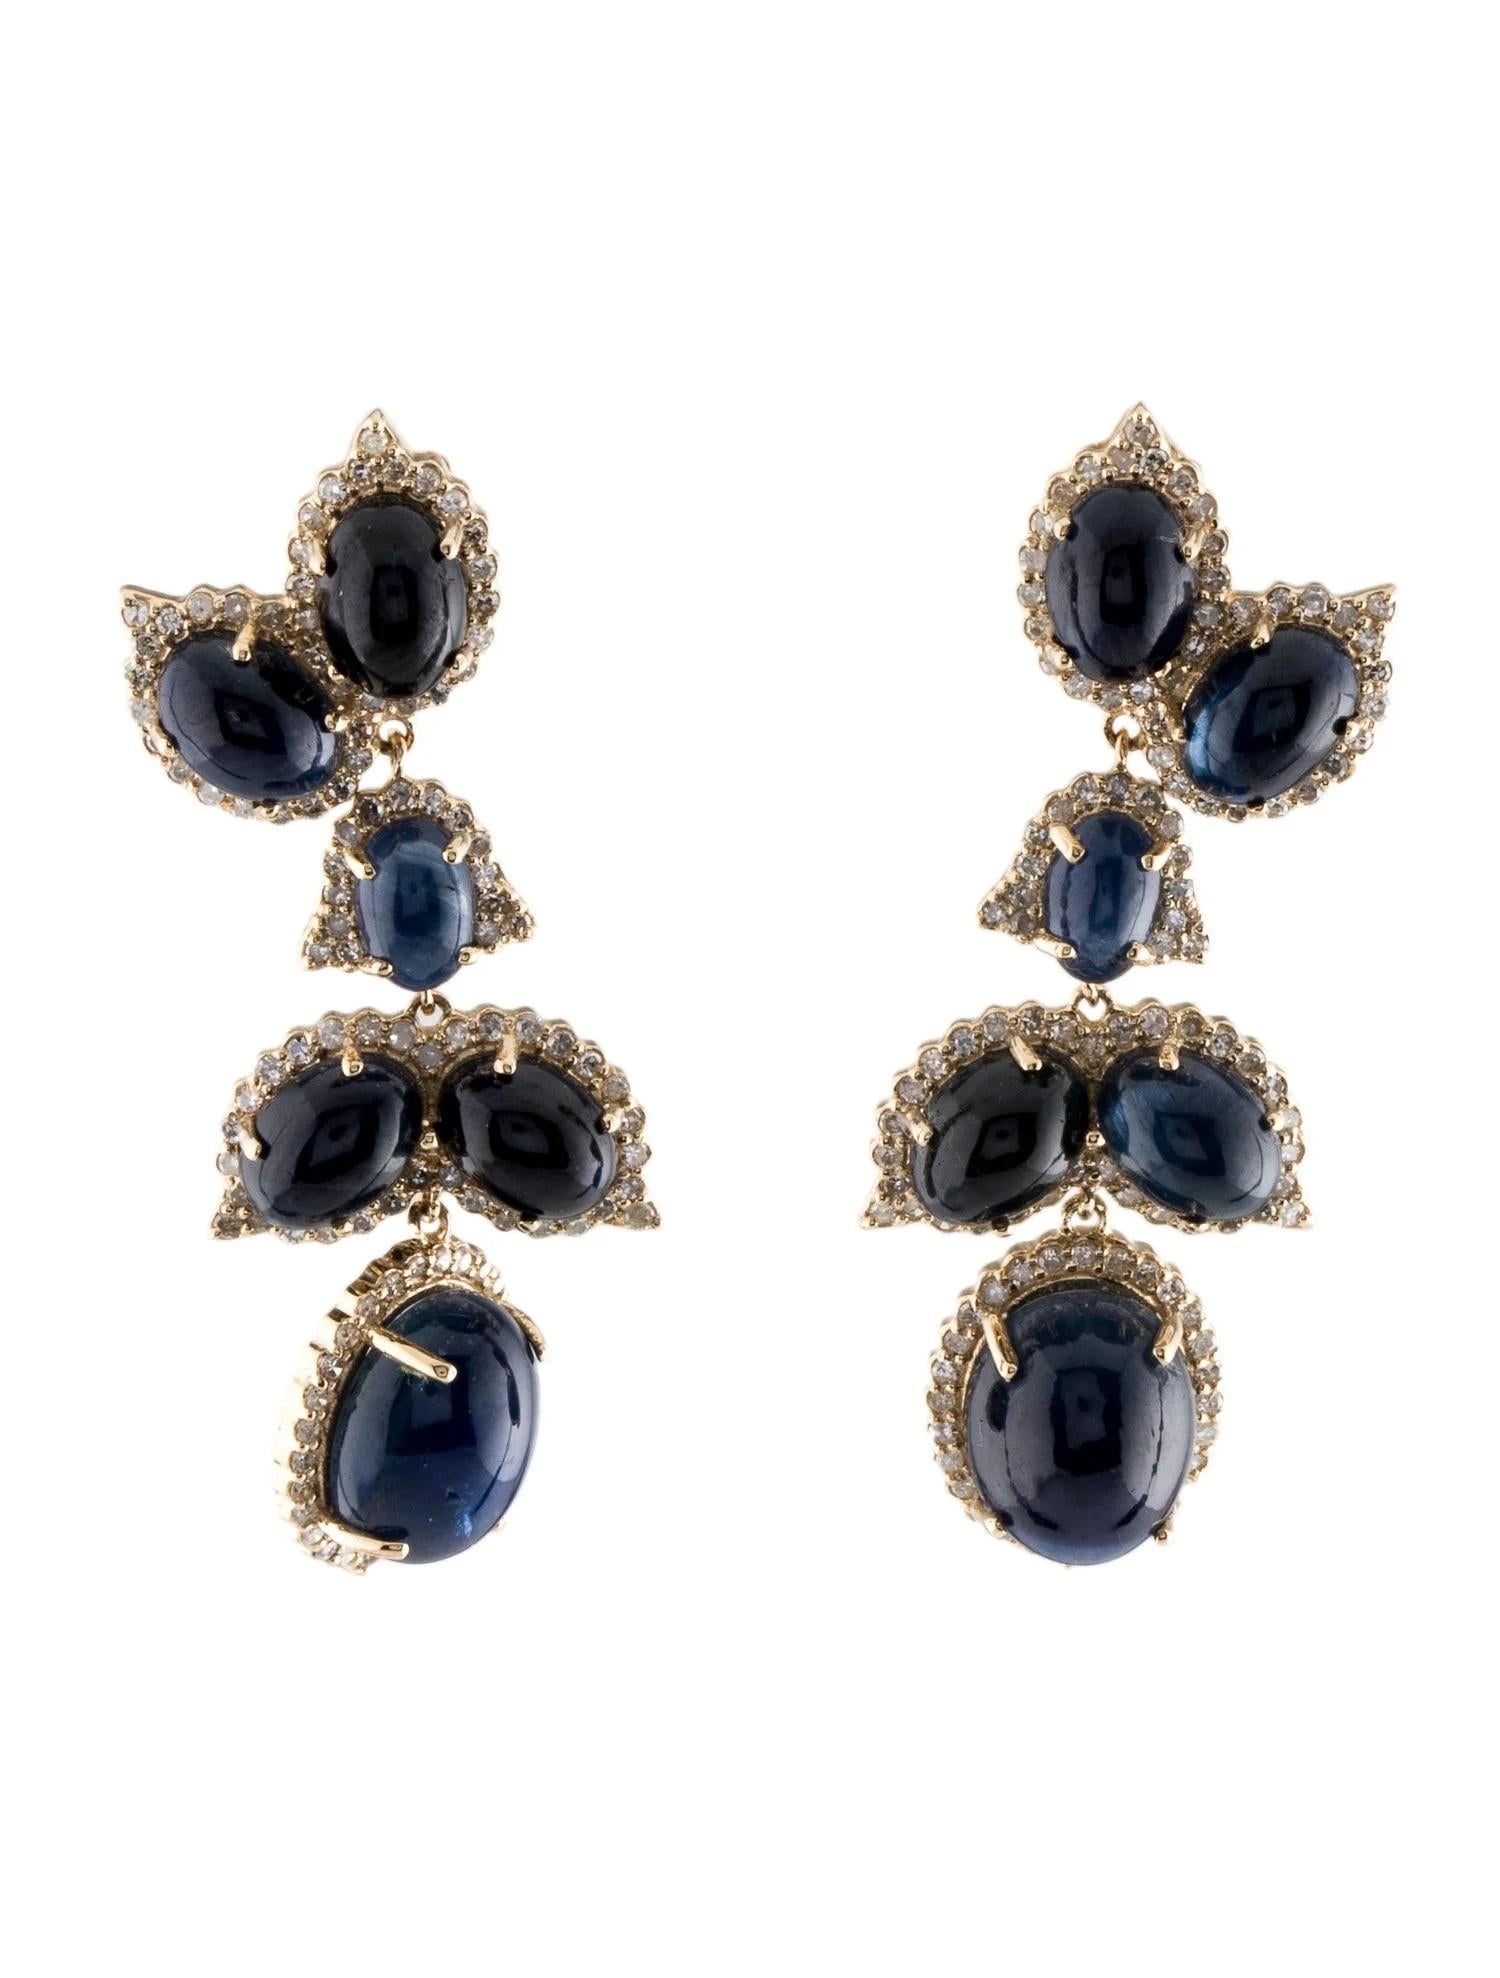 14K Saphir- und Diamant-Tropfen-Ohrringe - Elegante ovale Cabochons